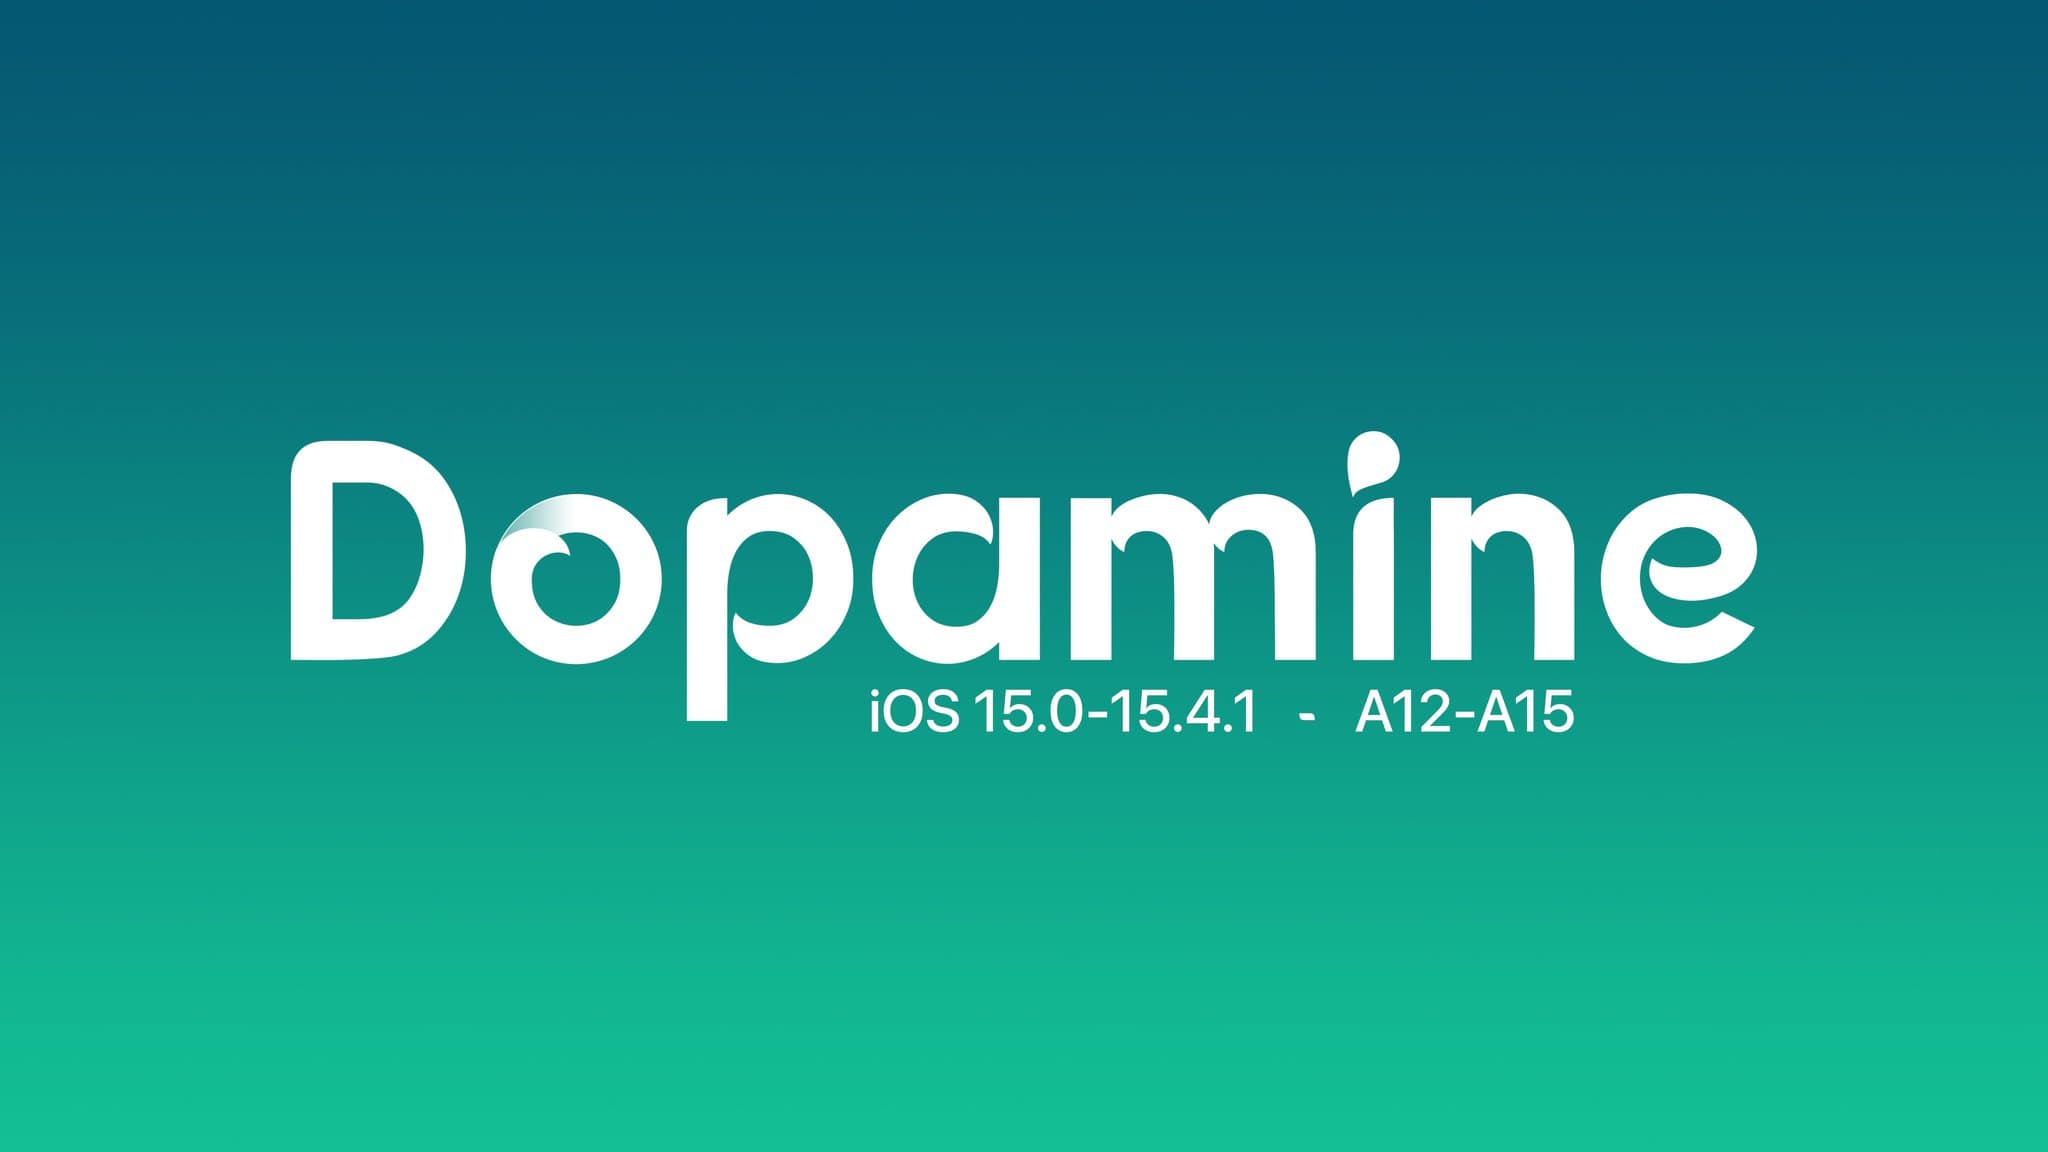 Cách jailbreak iOS 15.0 - 16.6.1 bằng Dopamine (thiết bị A12 - A16) 99